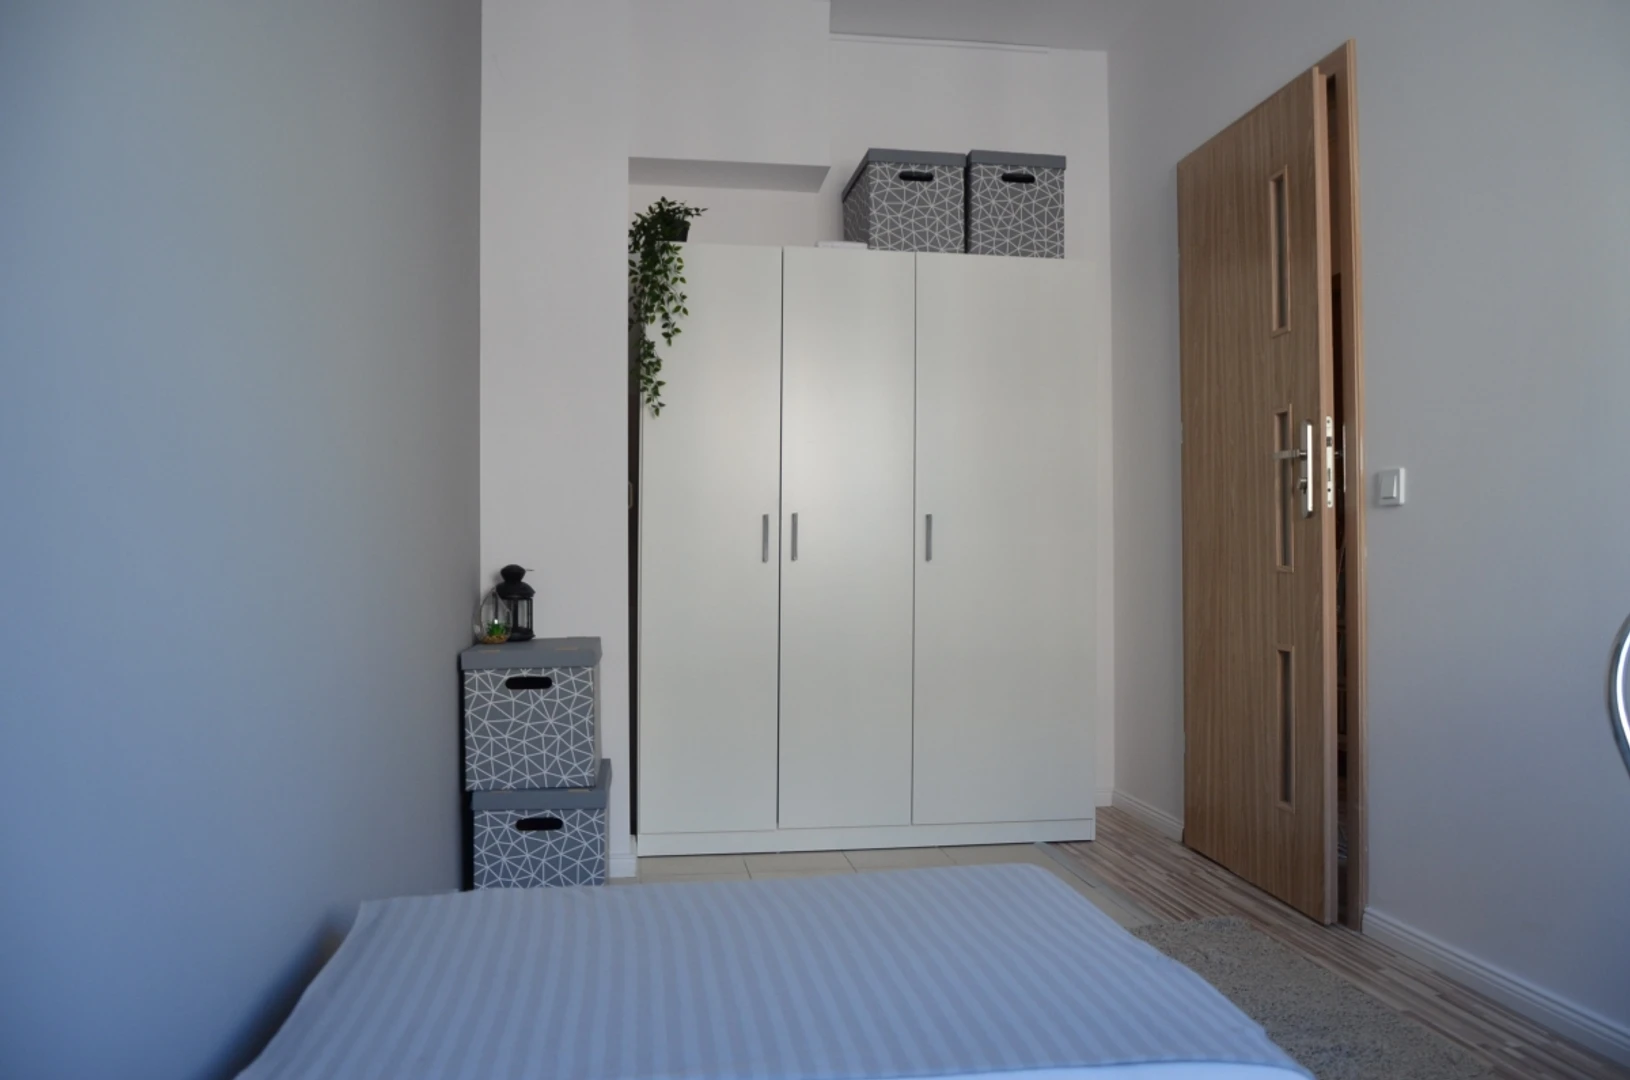 Habitación en alquiler con cama doble Gdynia